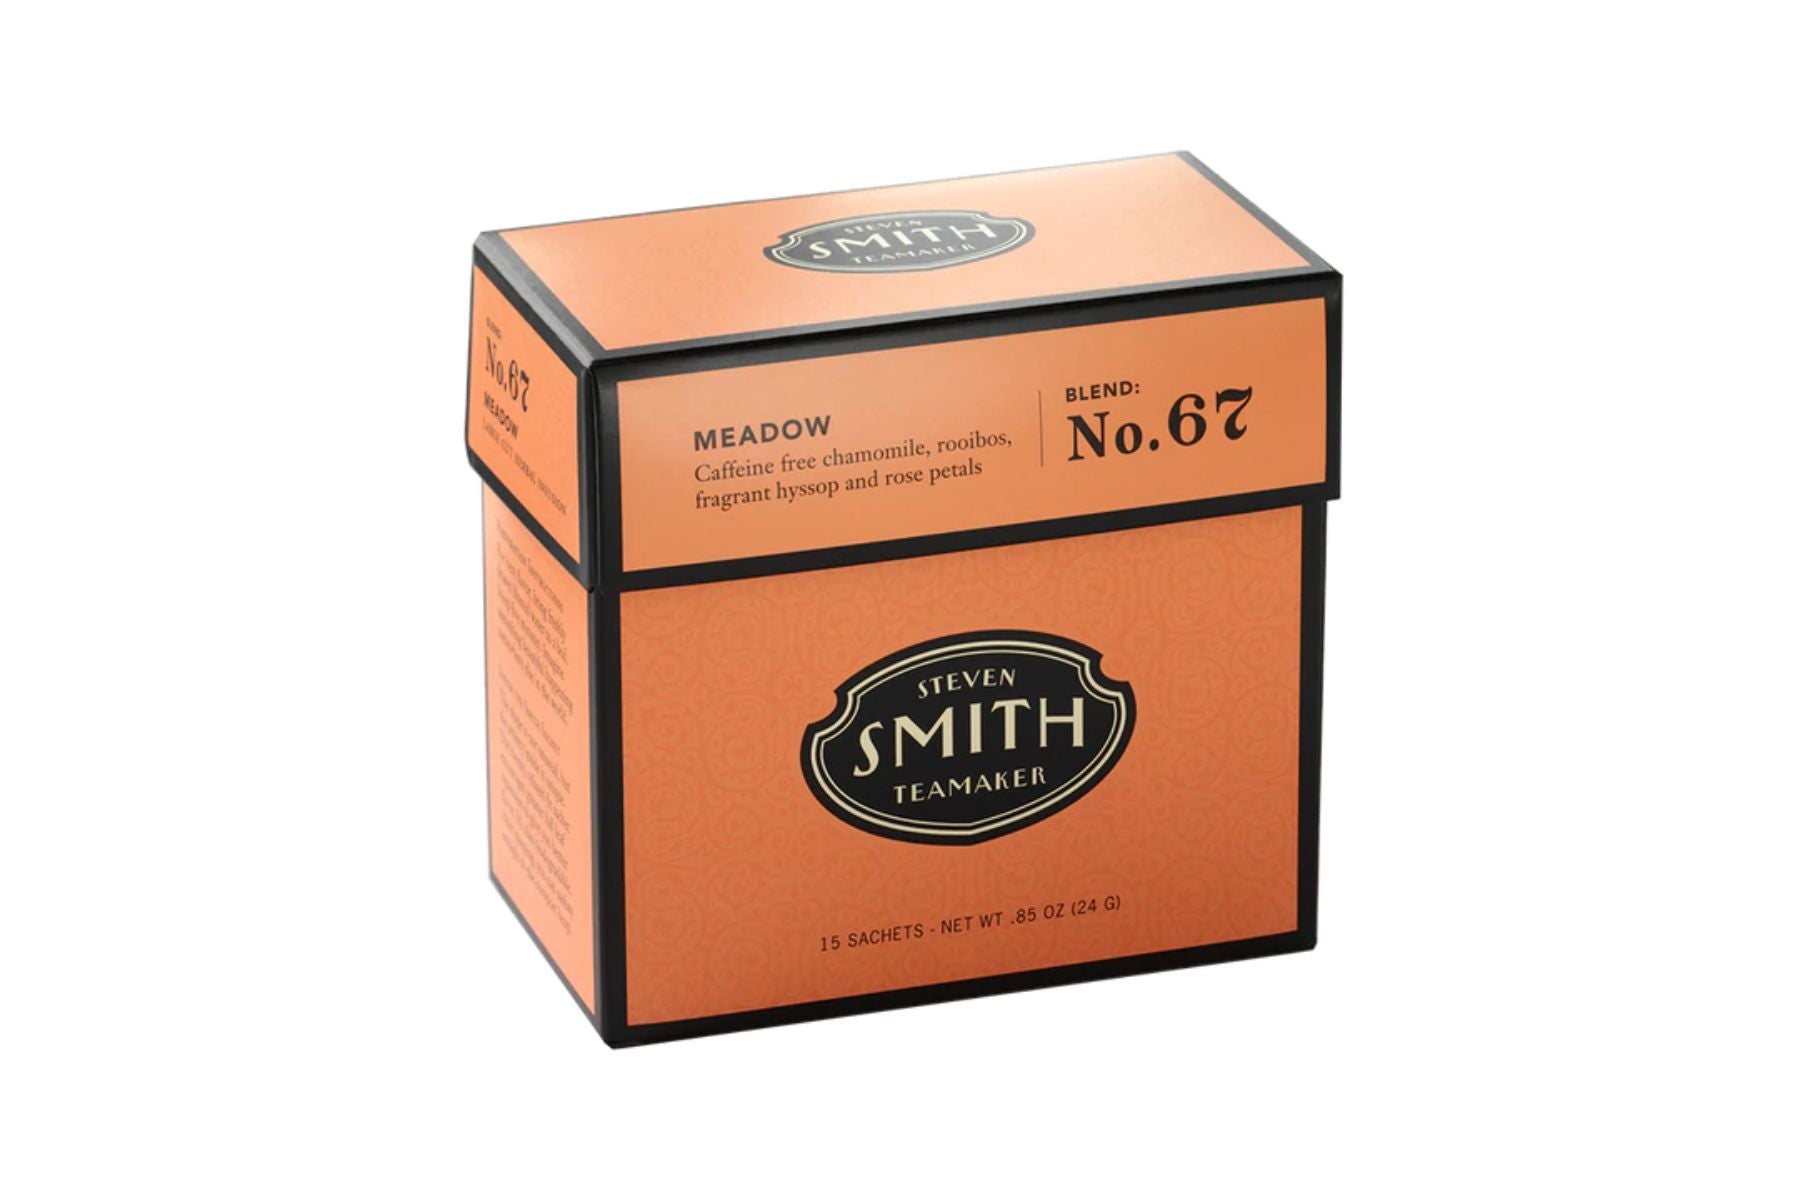 Smith Tea No. 67 Meadow